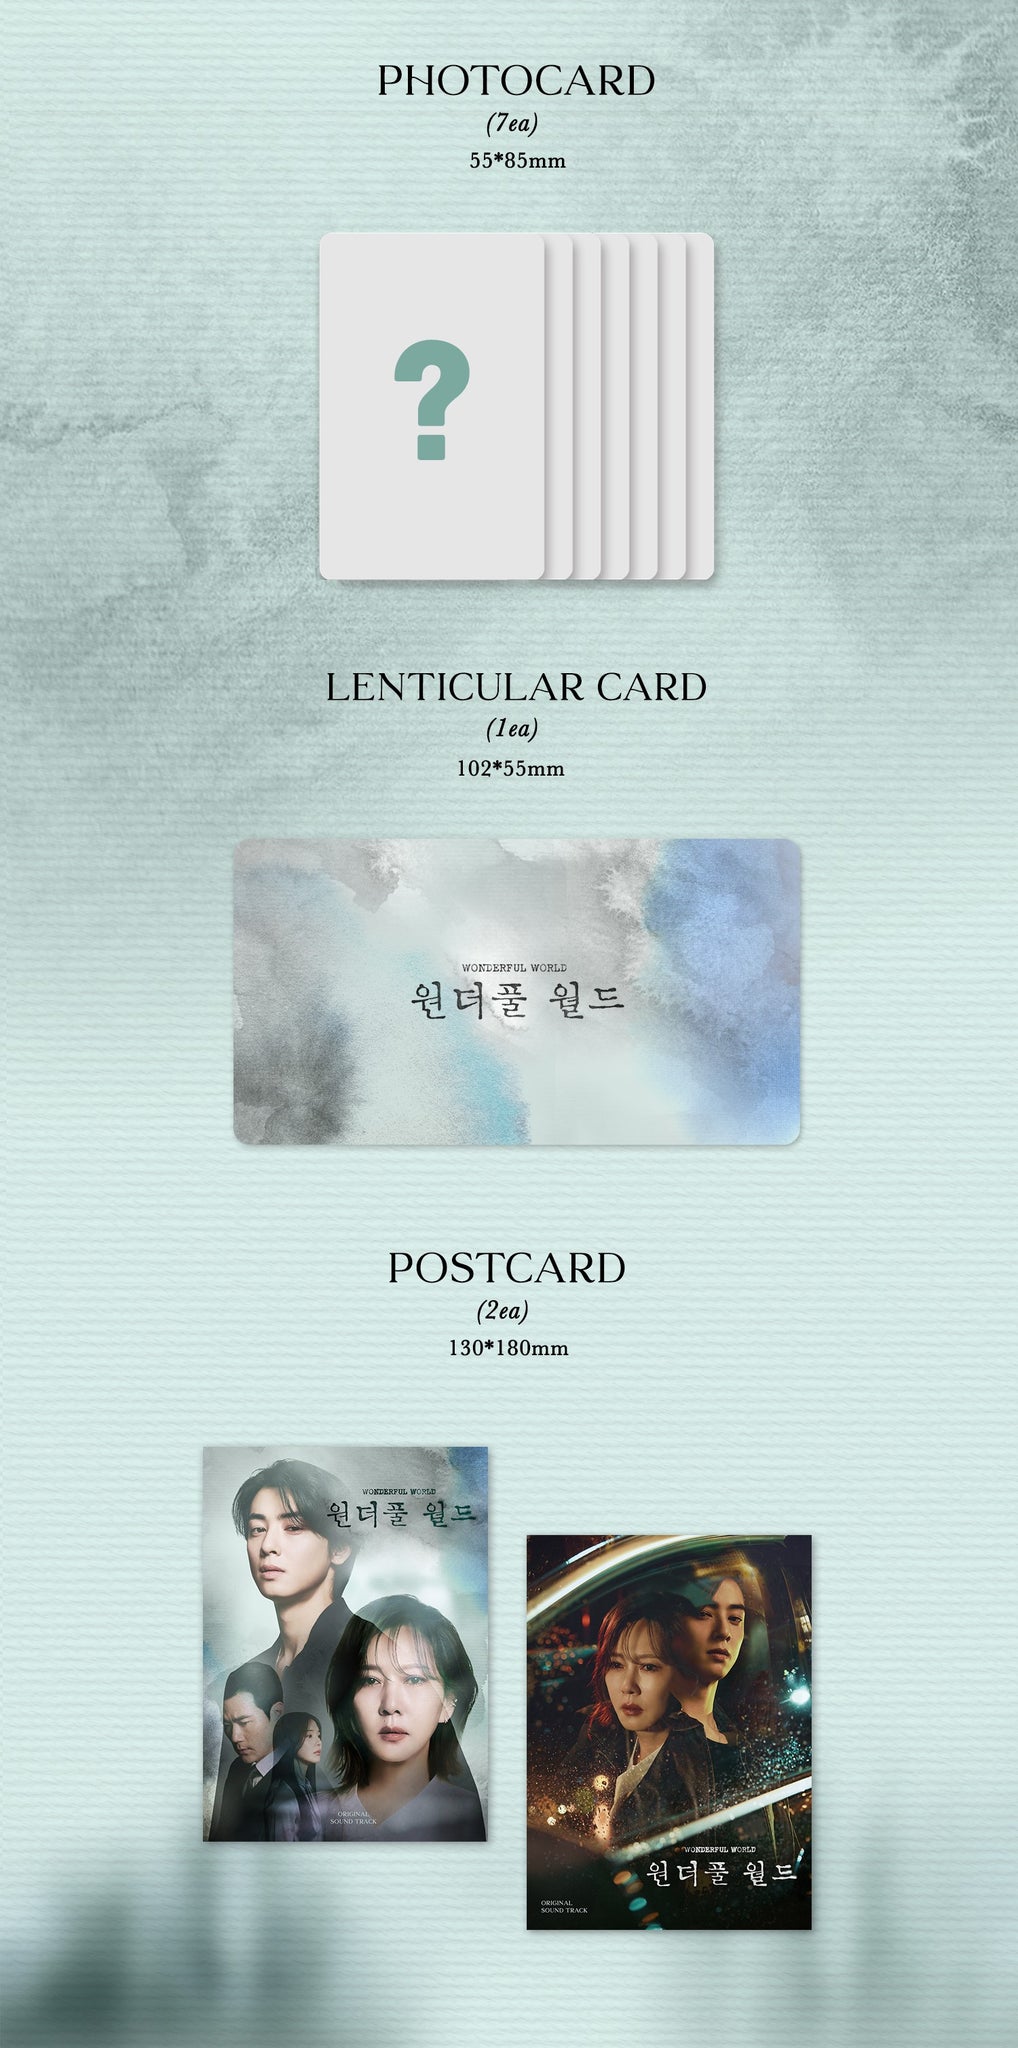 Wonderful World OST Inclusions: Photocard Set, Lenticular Card, Postcard Set